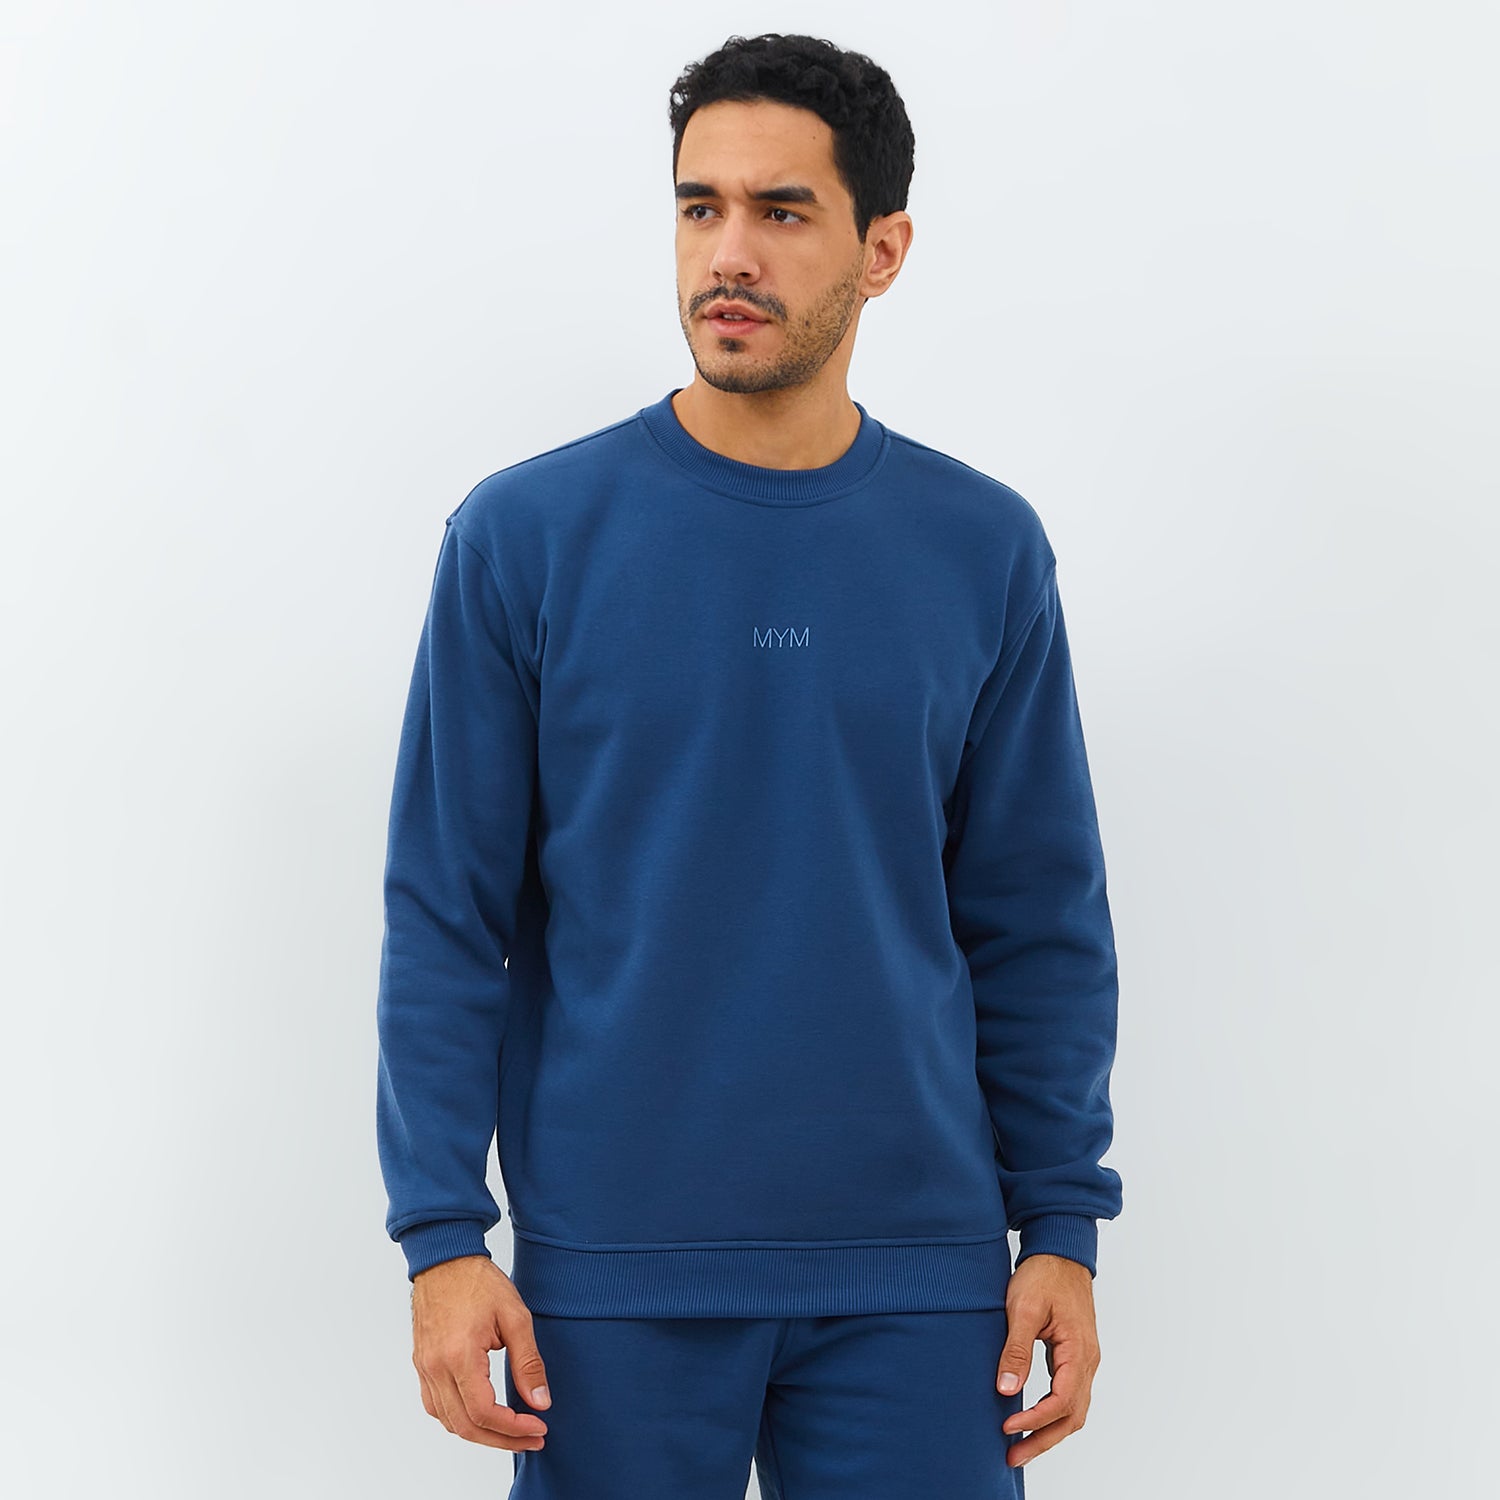 Mym Print Crewneck Sweater [MYMSW 01]